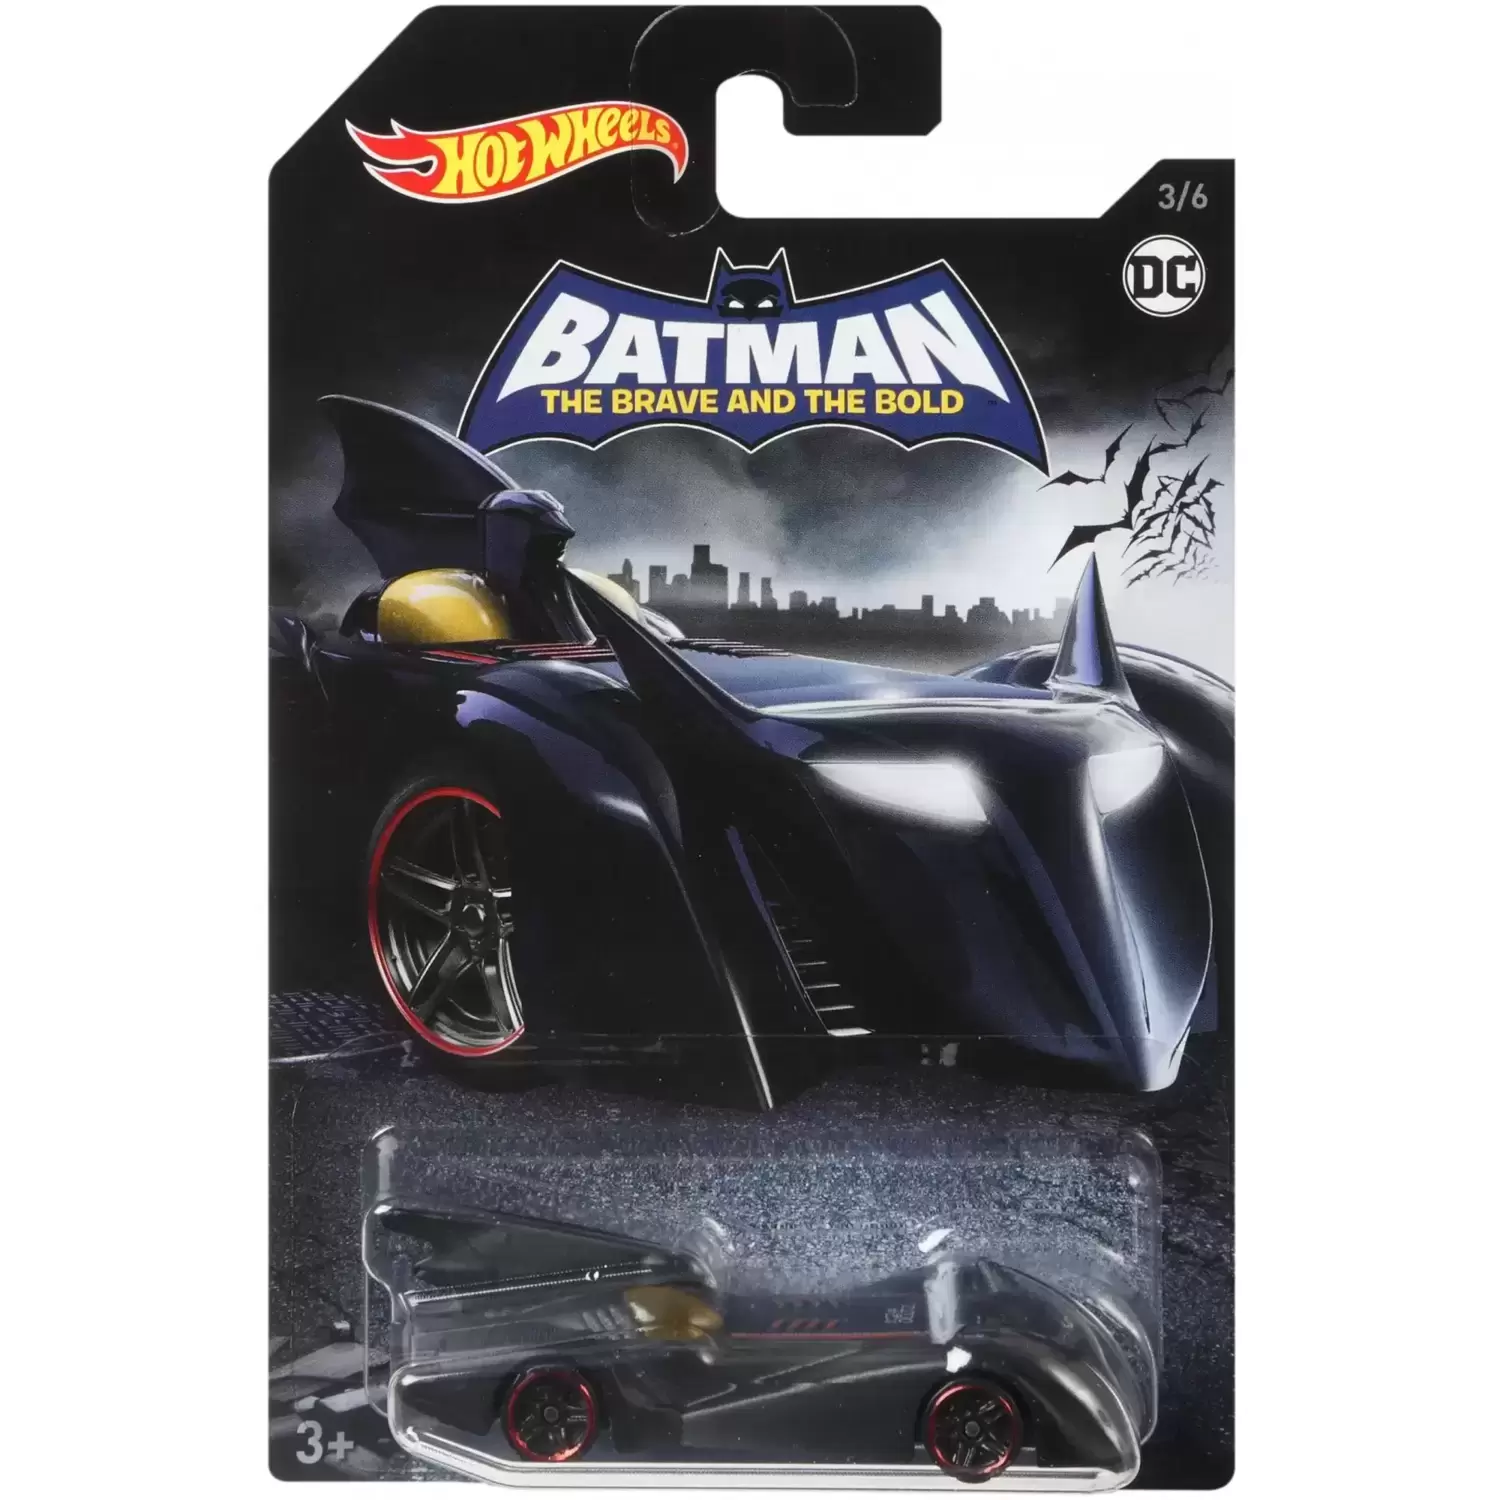 Batman Walmart Exclusive 2018 Series - Batman The Brave and the Bold - Batmobile